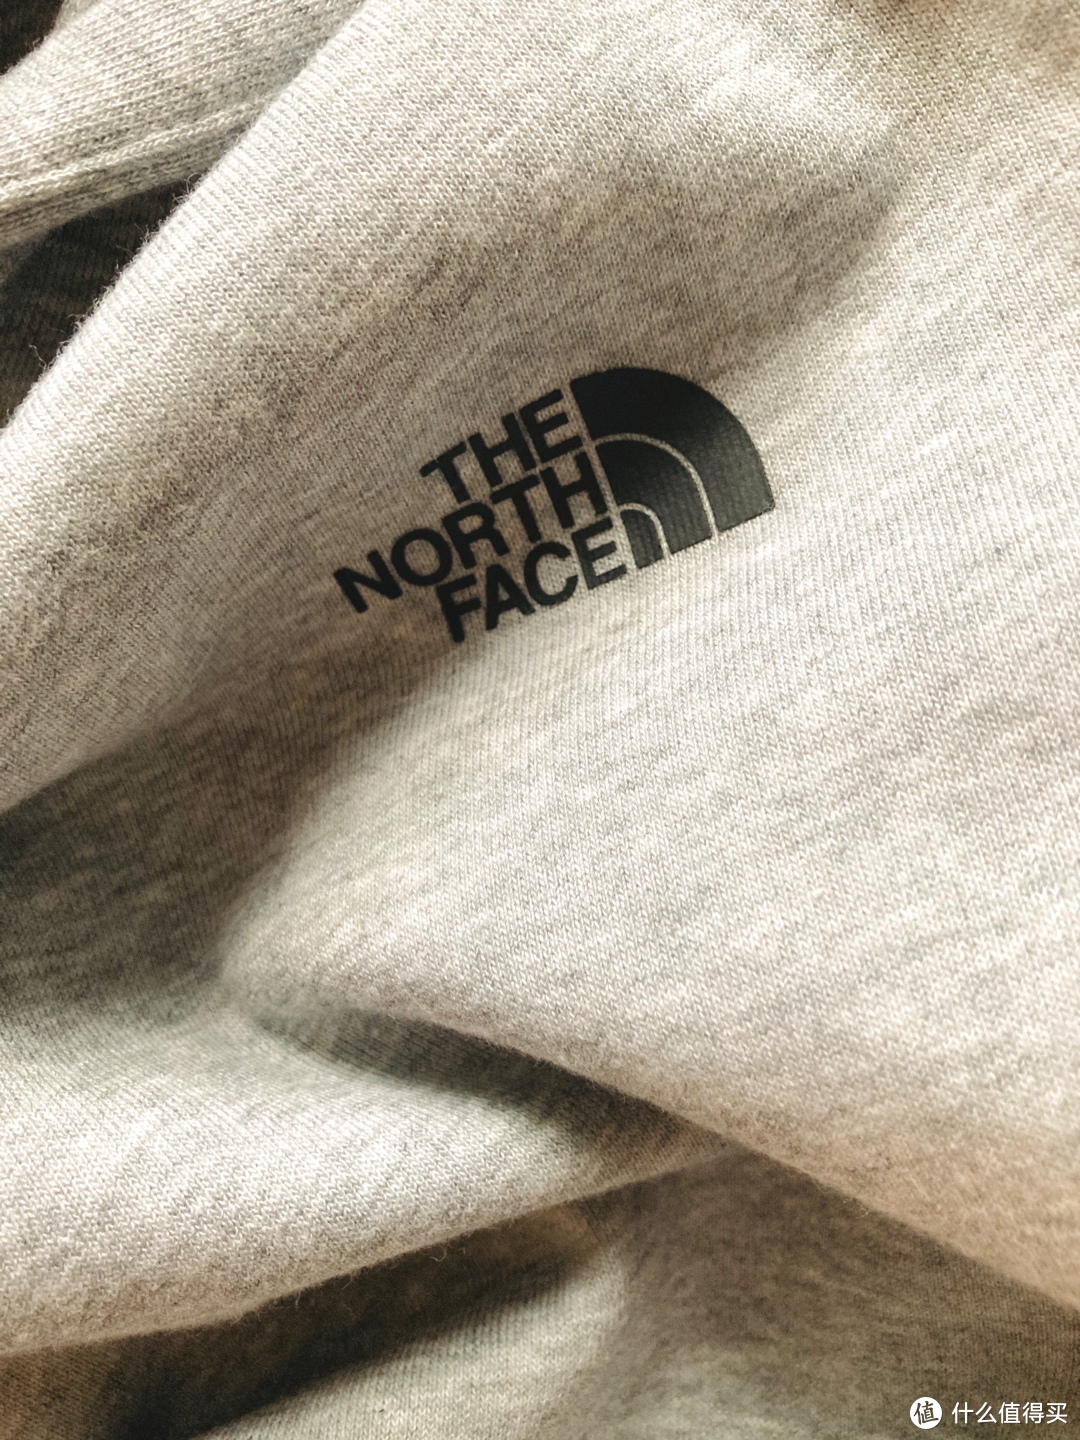 TheNorthFace北面2020春季针织卫衣情侣款开箱分享